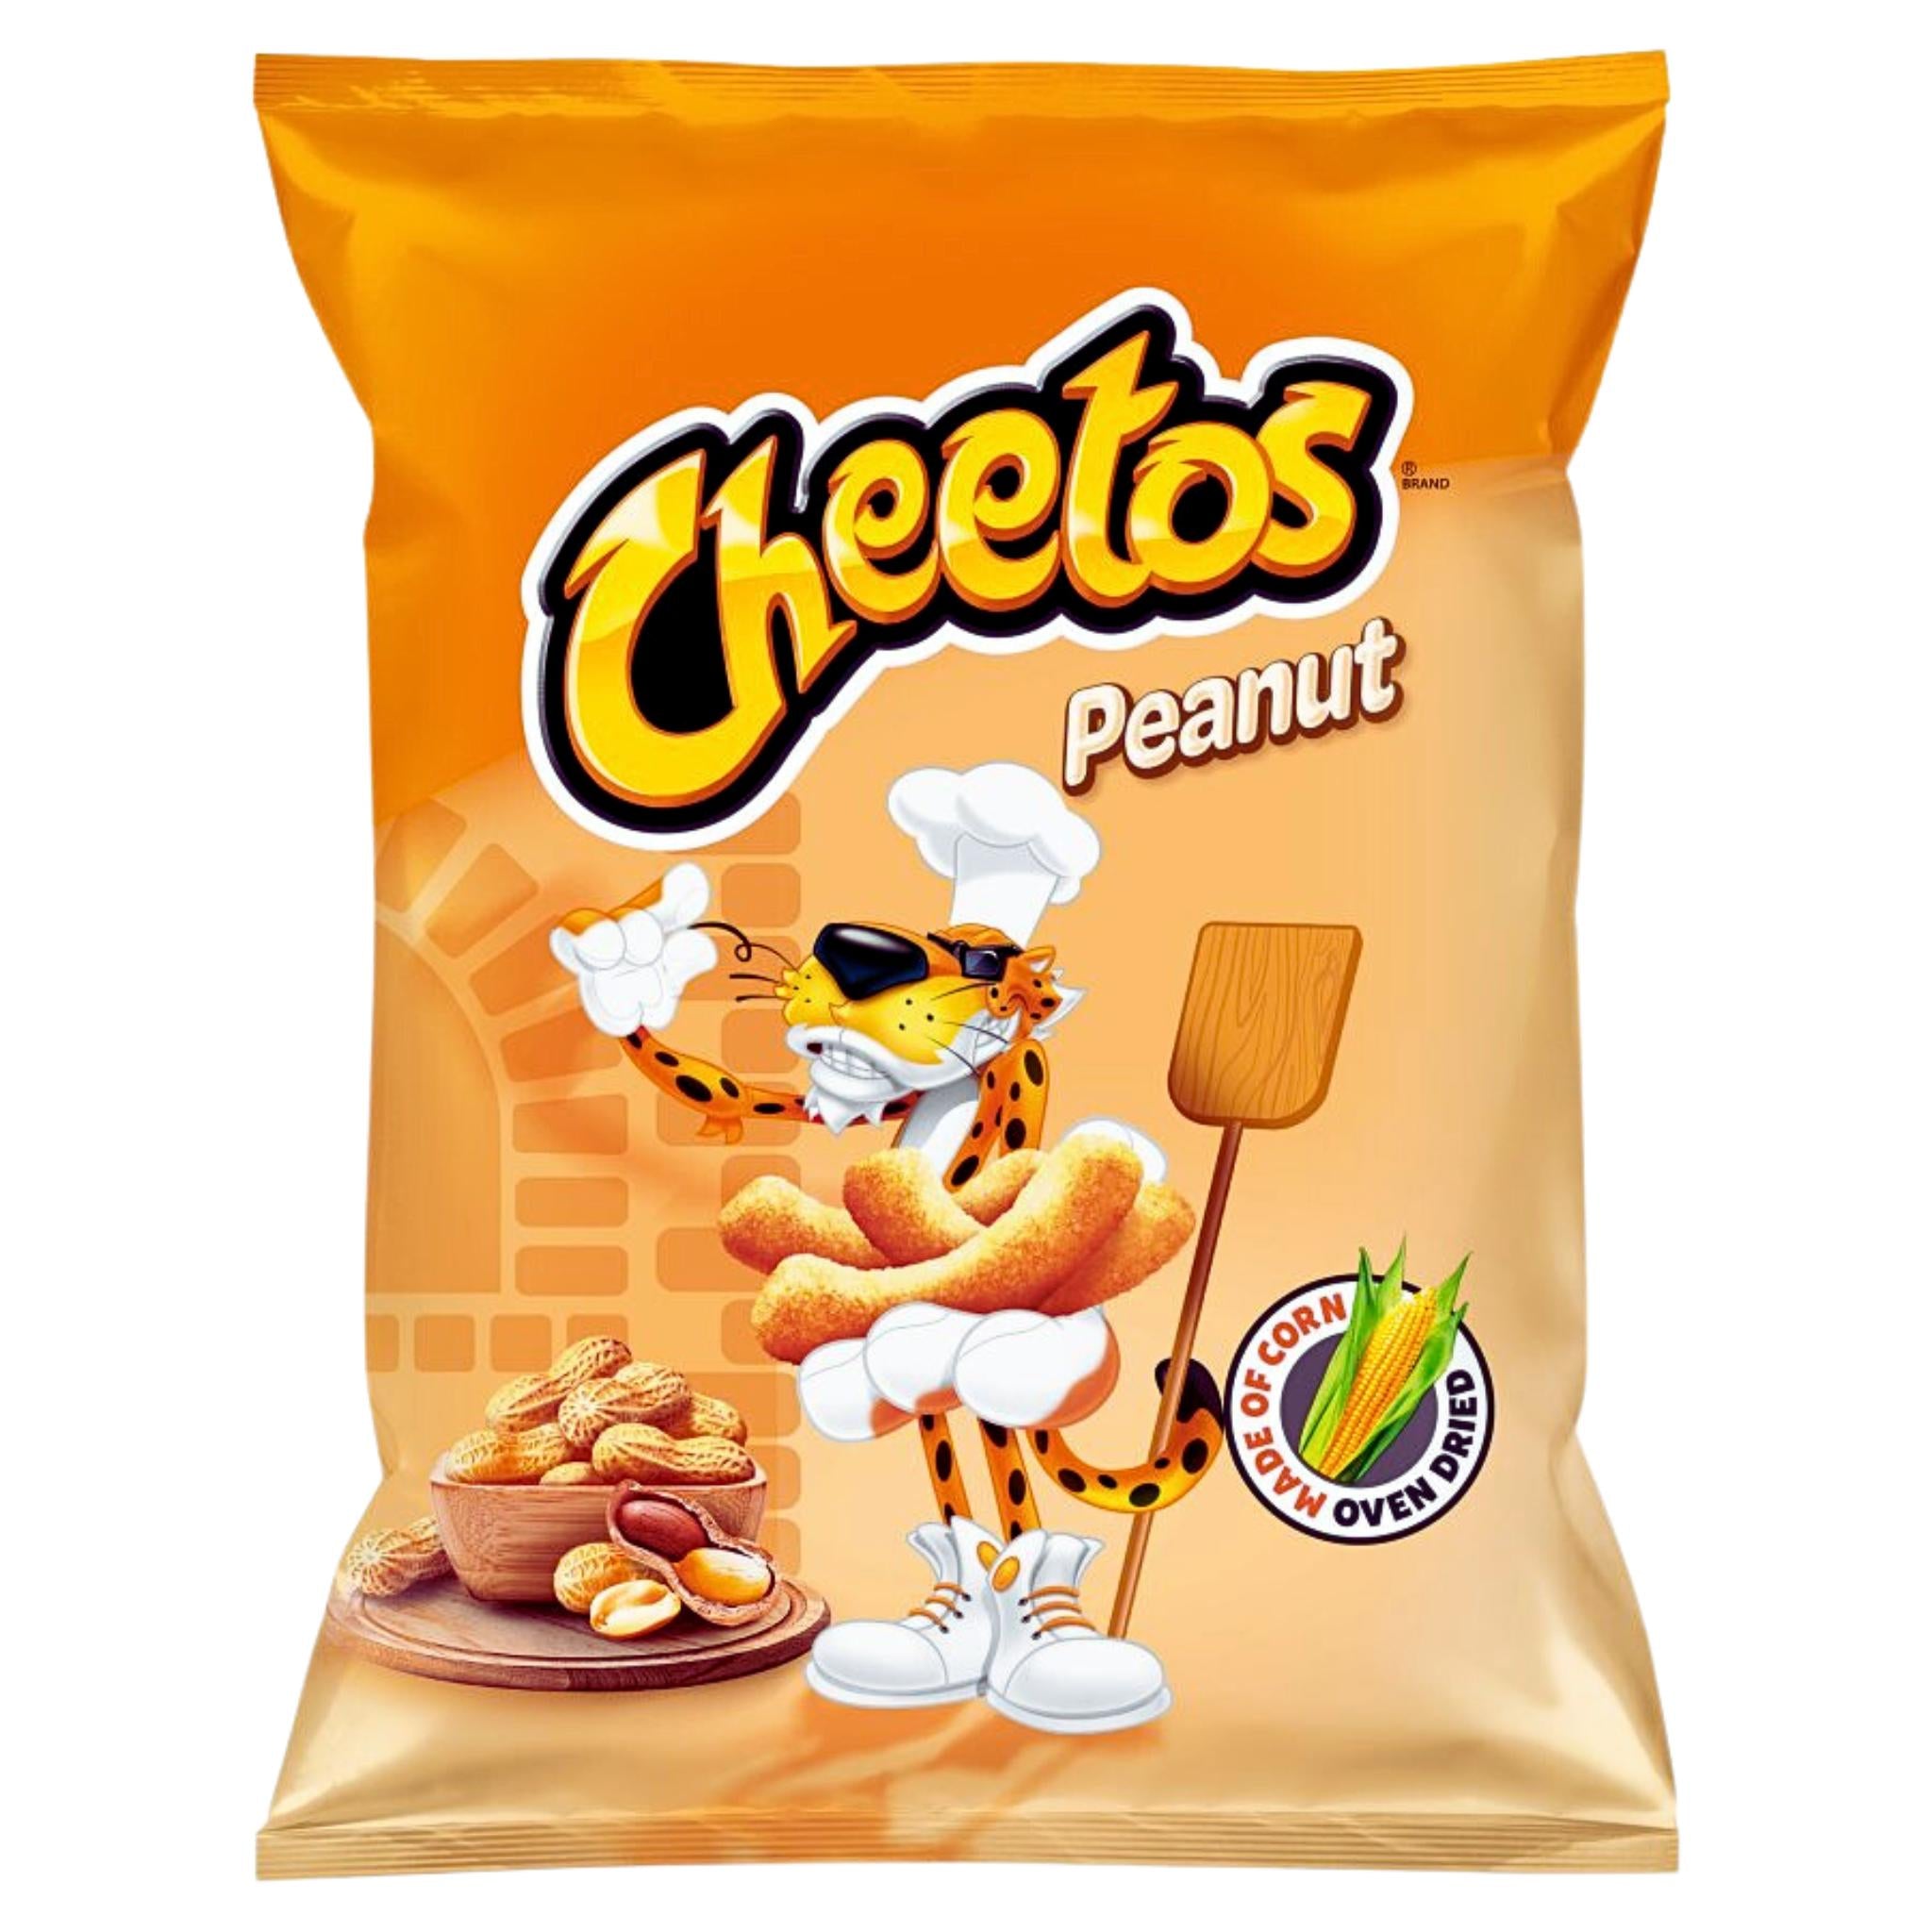 Cheetos Peanut - 85g (POOLS)